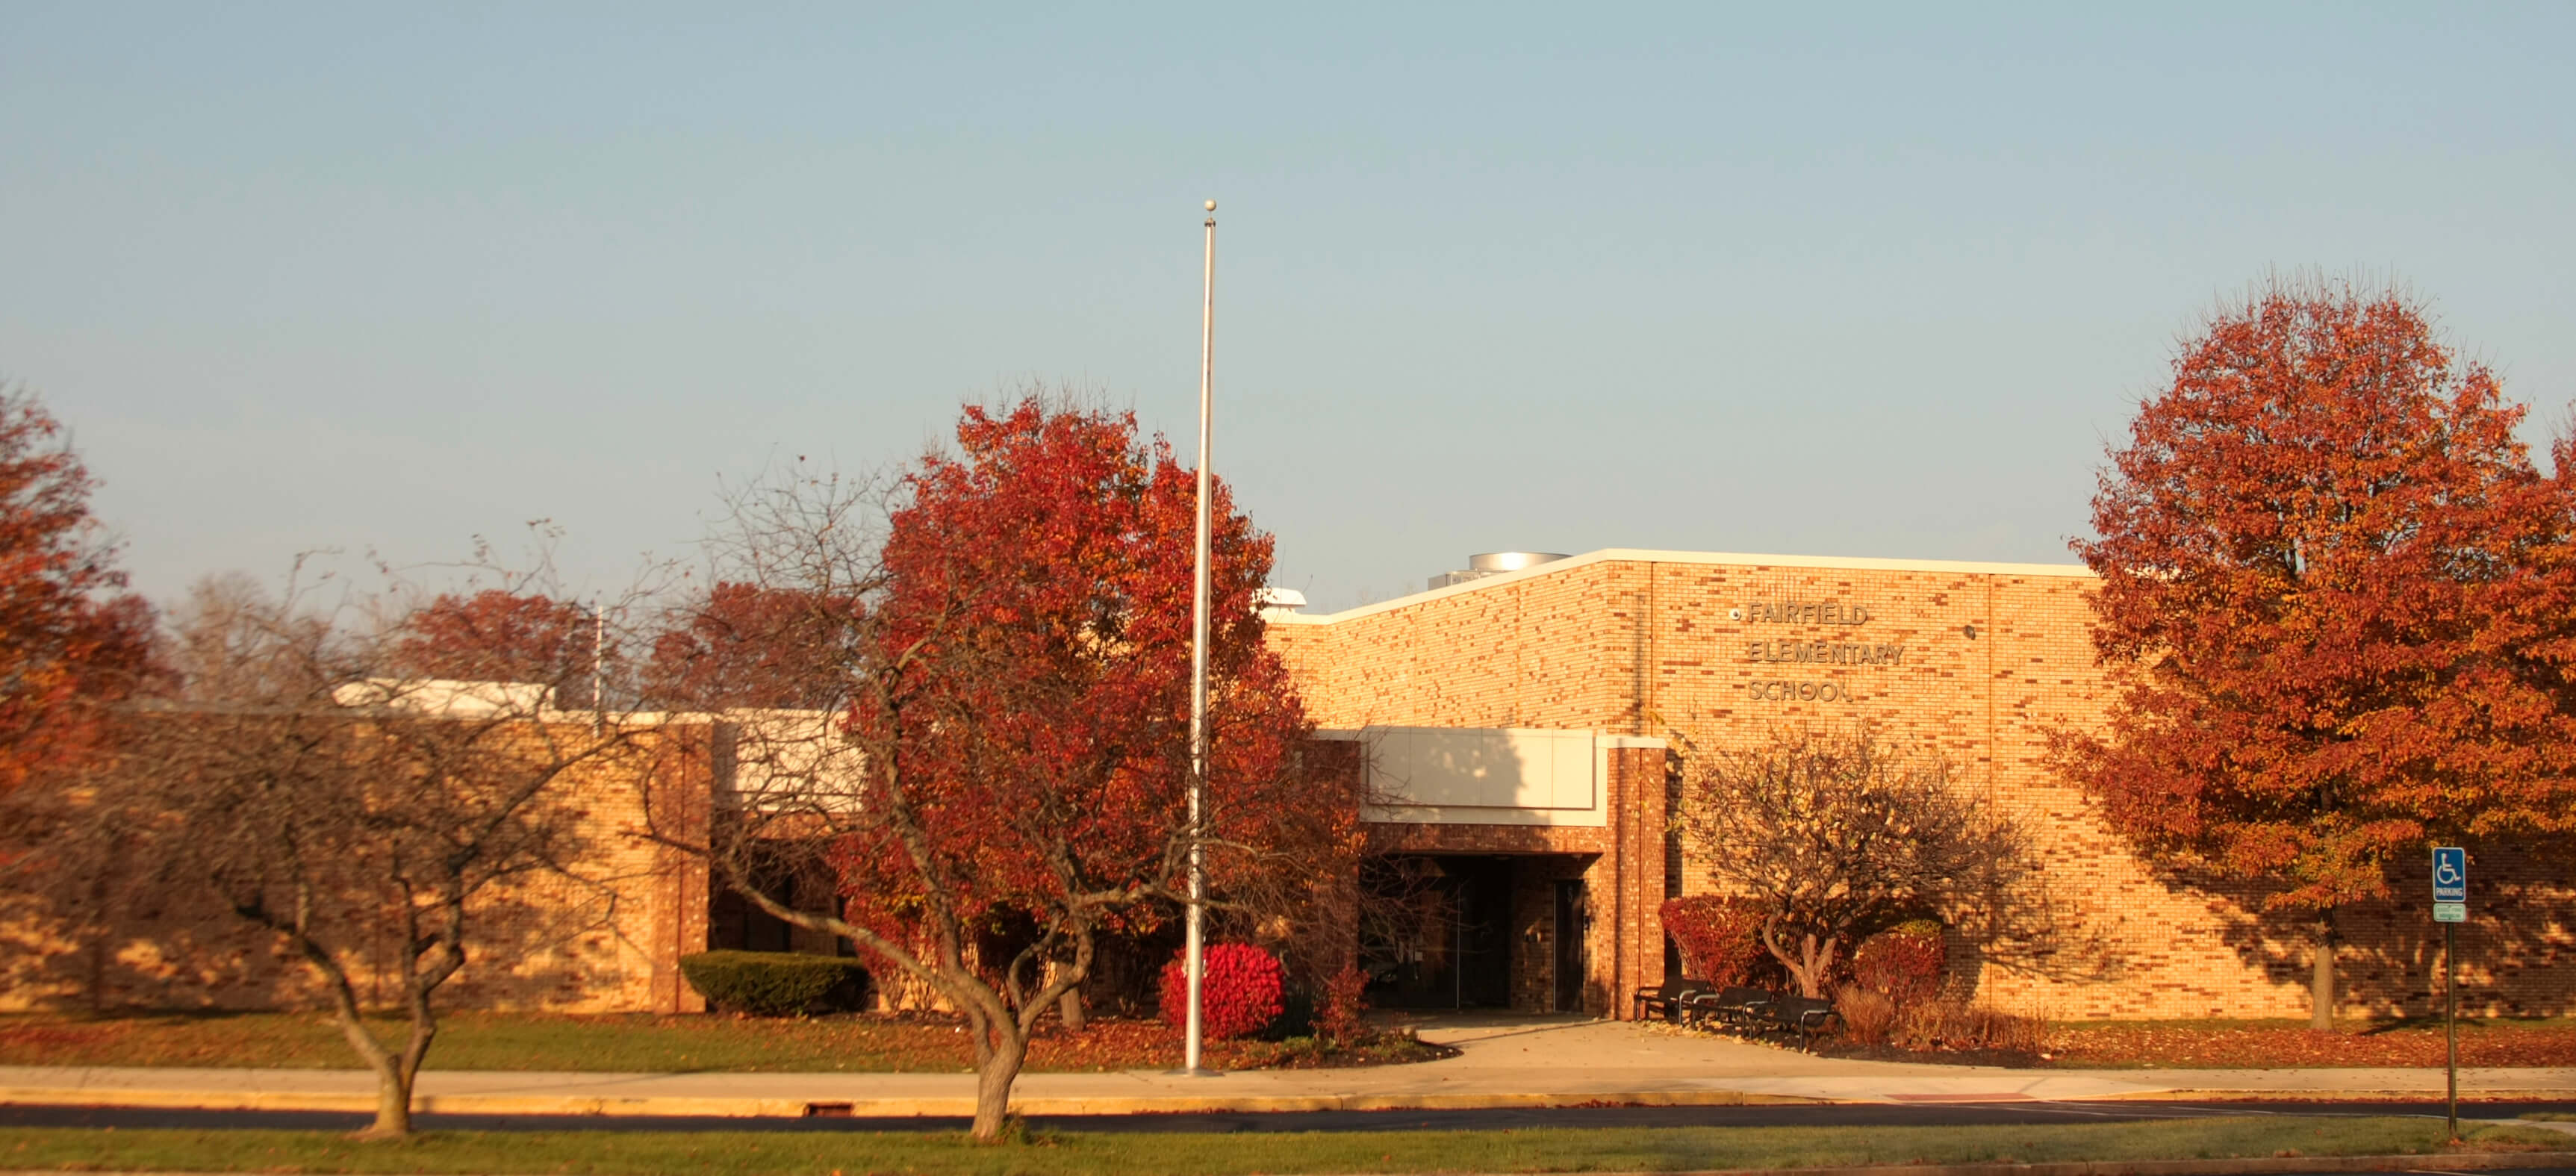 Fairfield Elementary exterior